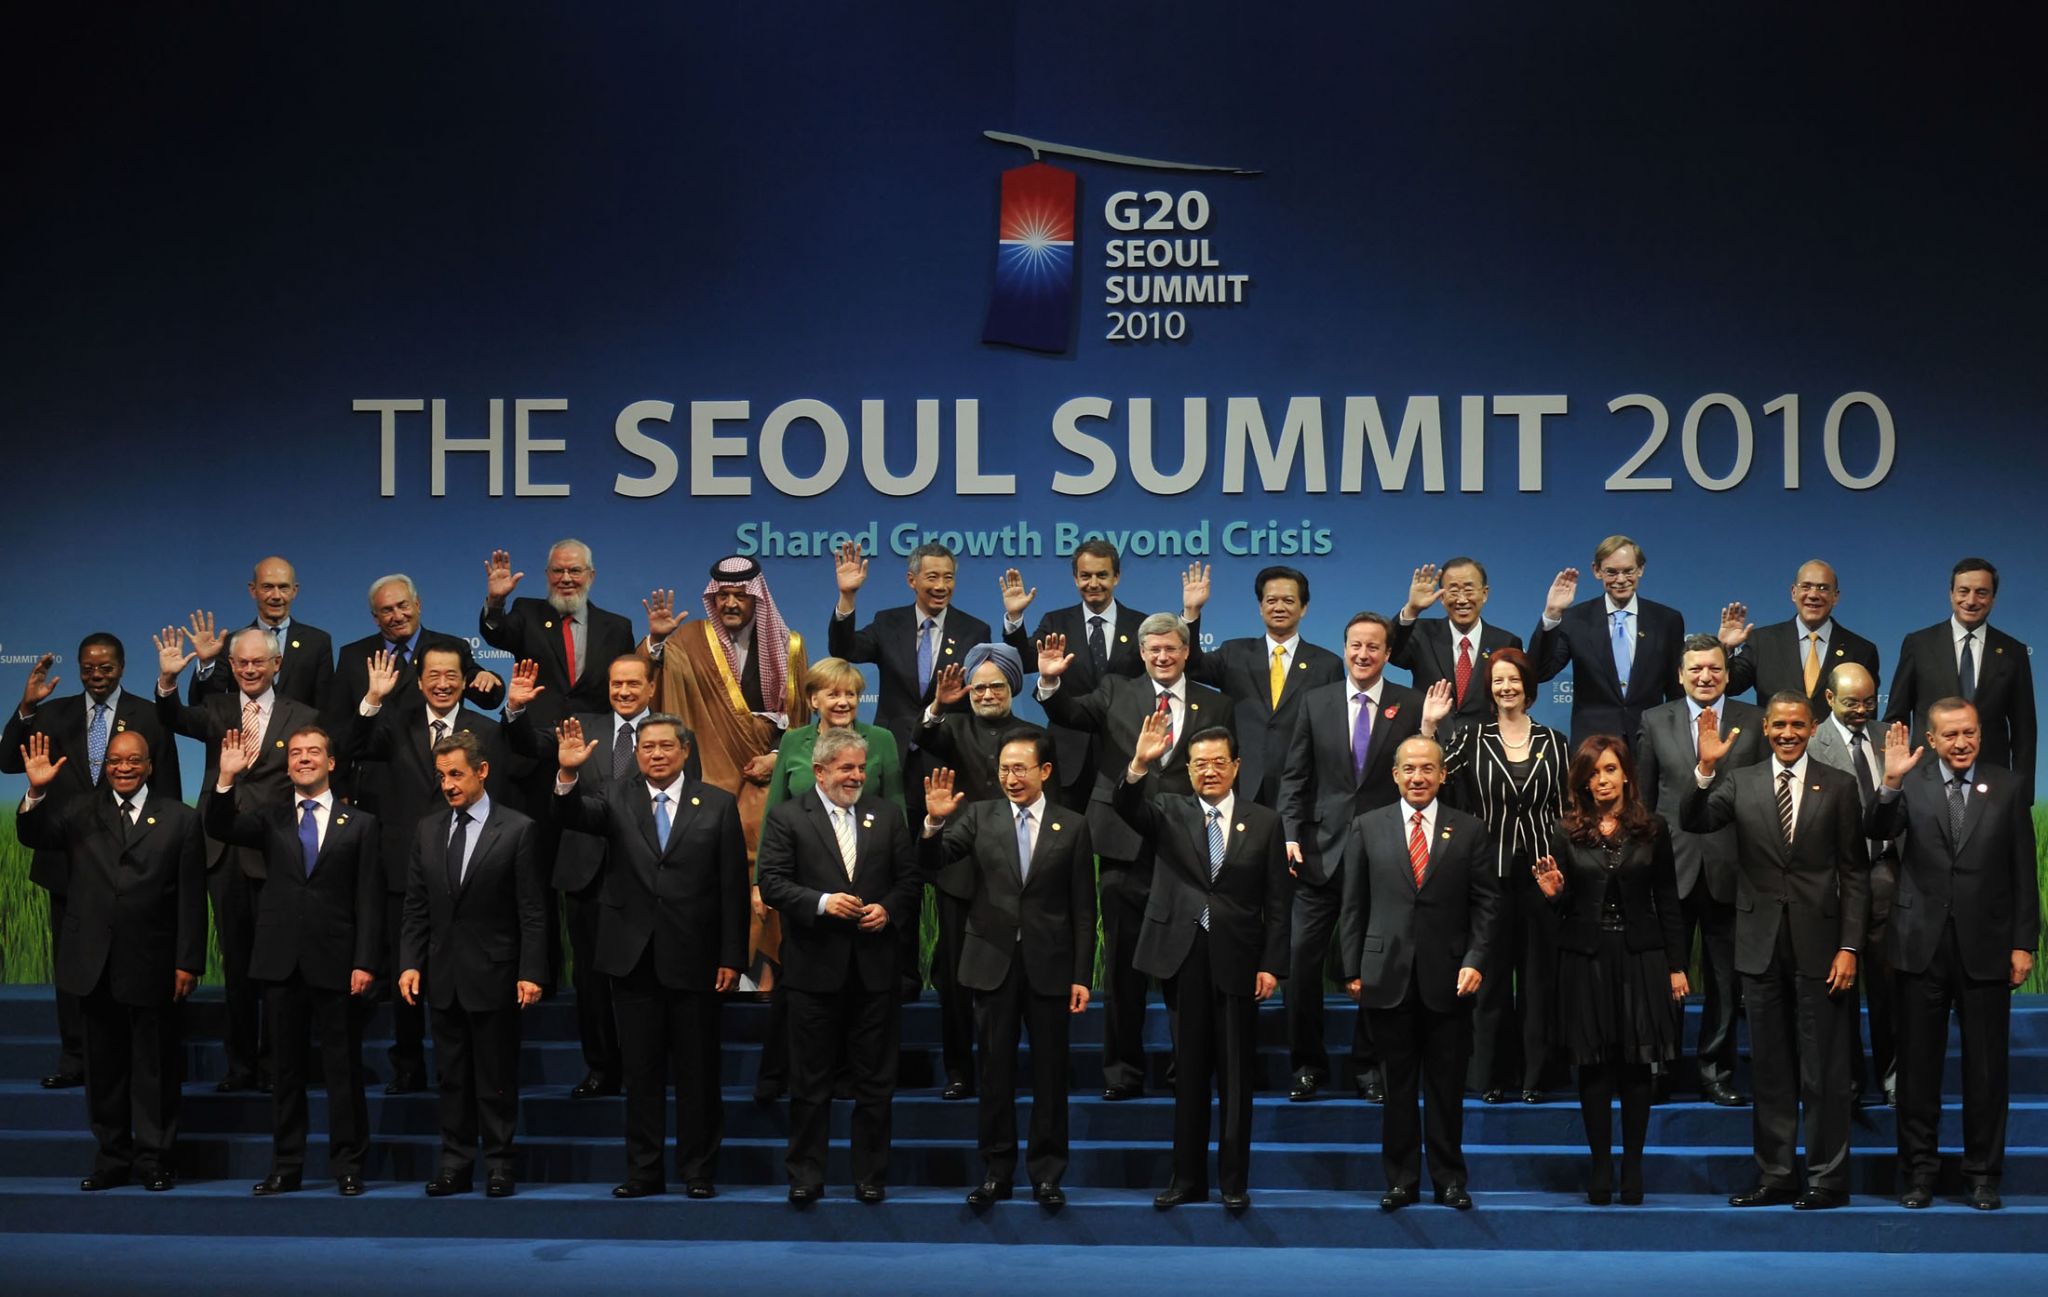 http://www.net4info.de/photos/cpg/albums/userpics/10002/2010_G20_Seoul_summit.JPG